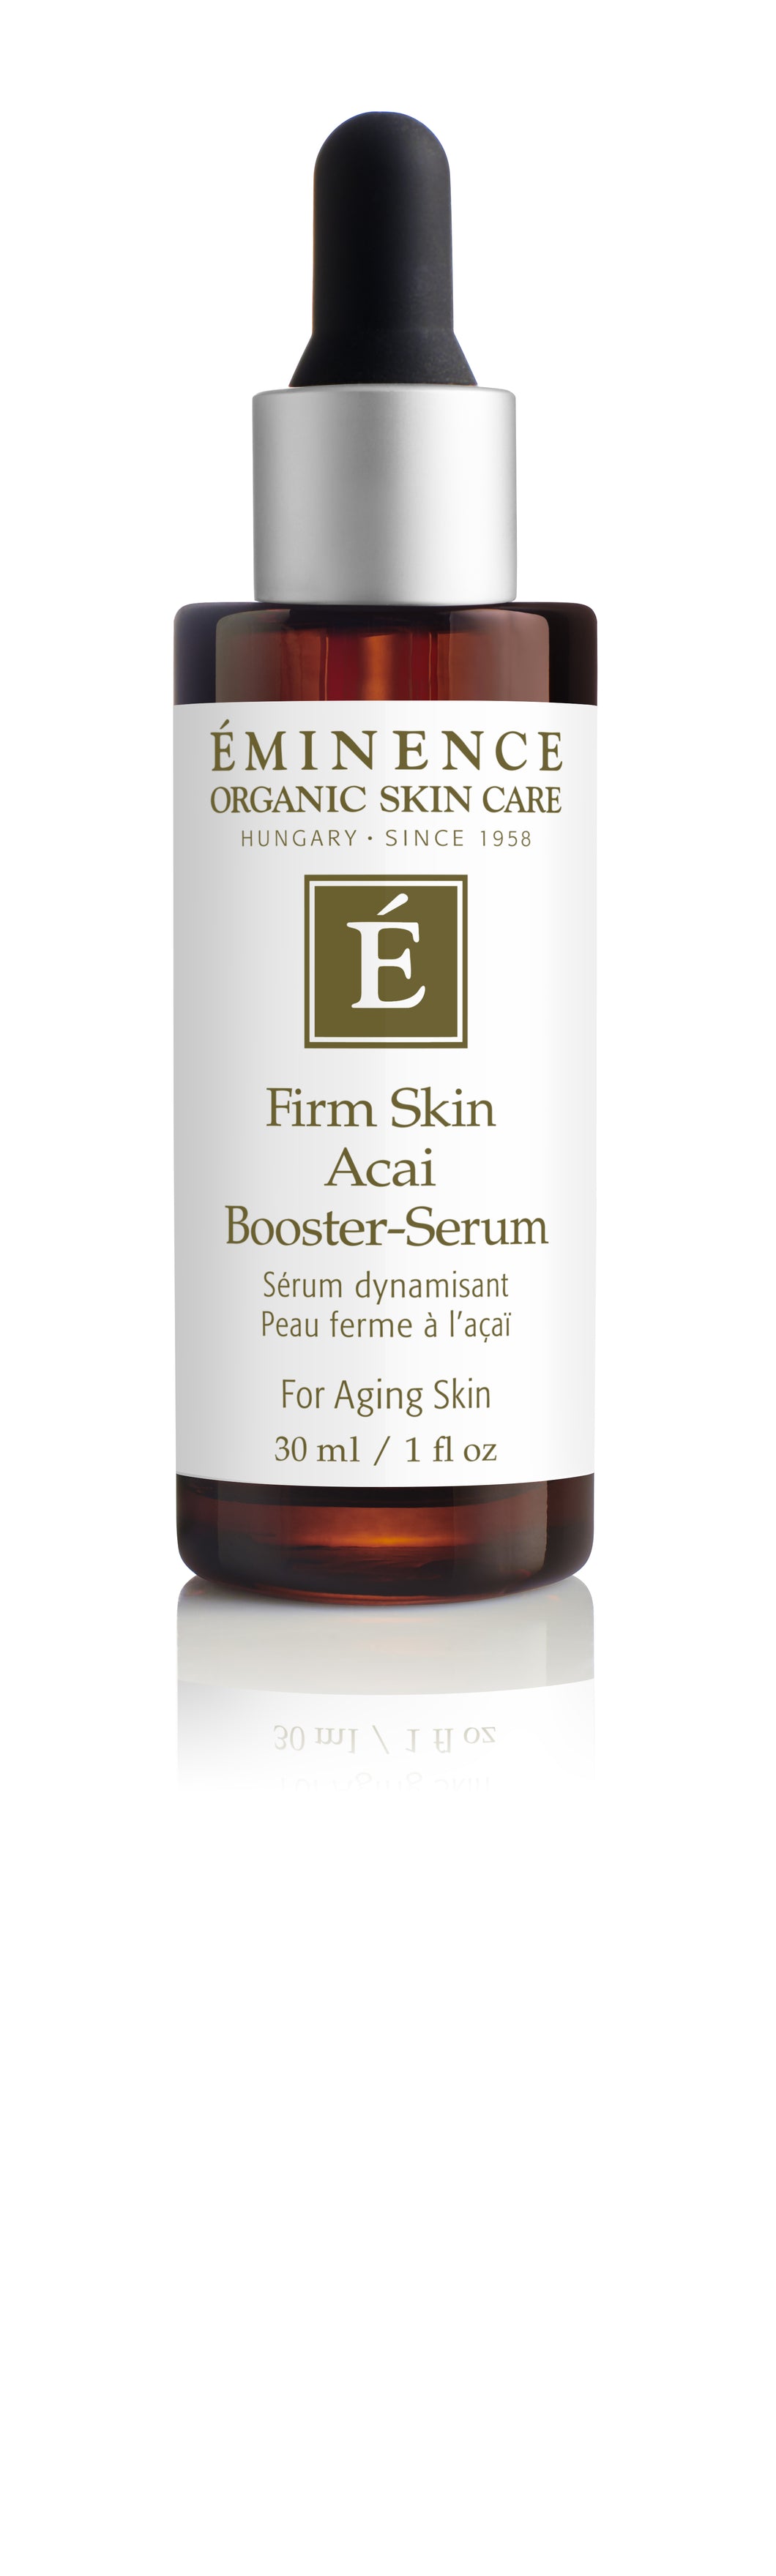 Eminence: Firm Skin Acai Booster-Serum